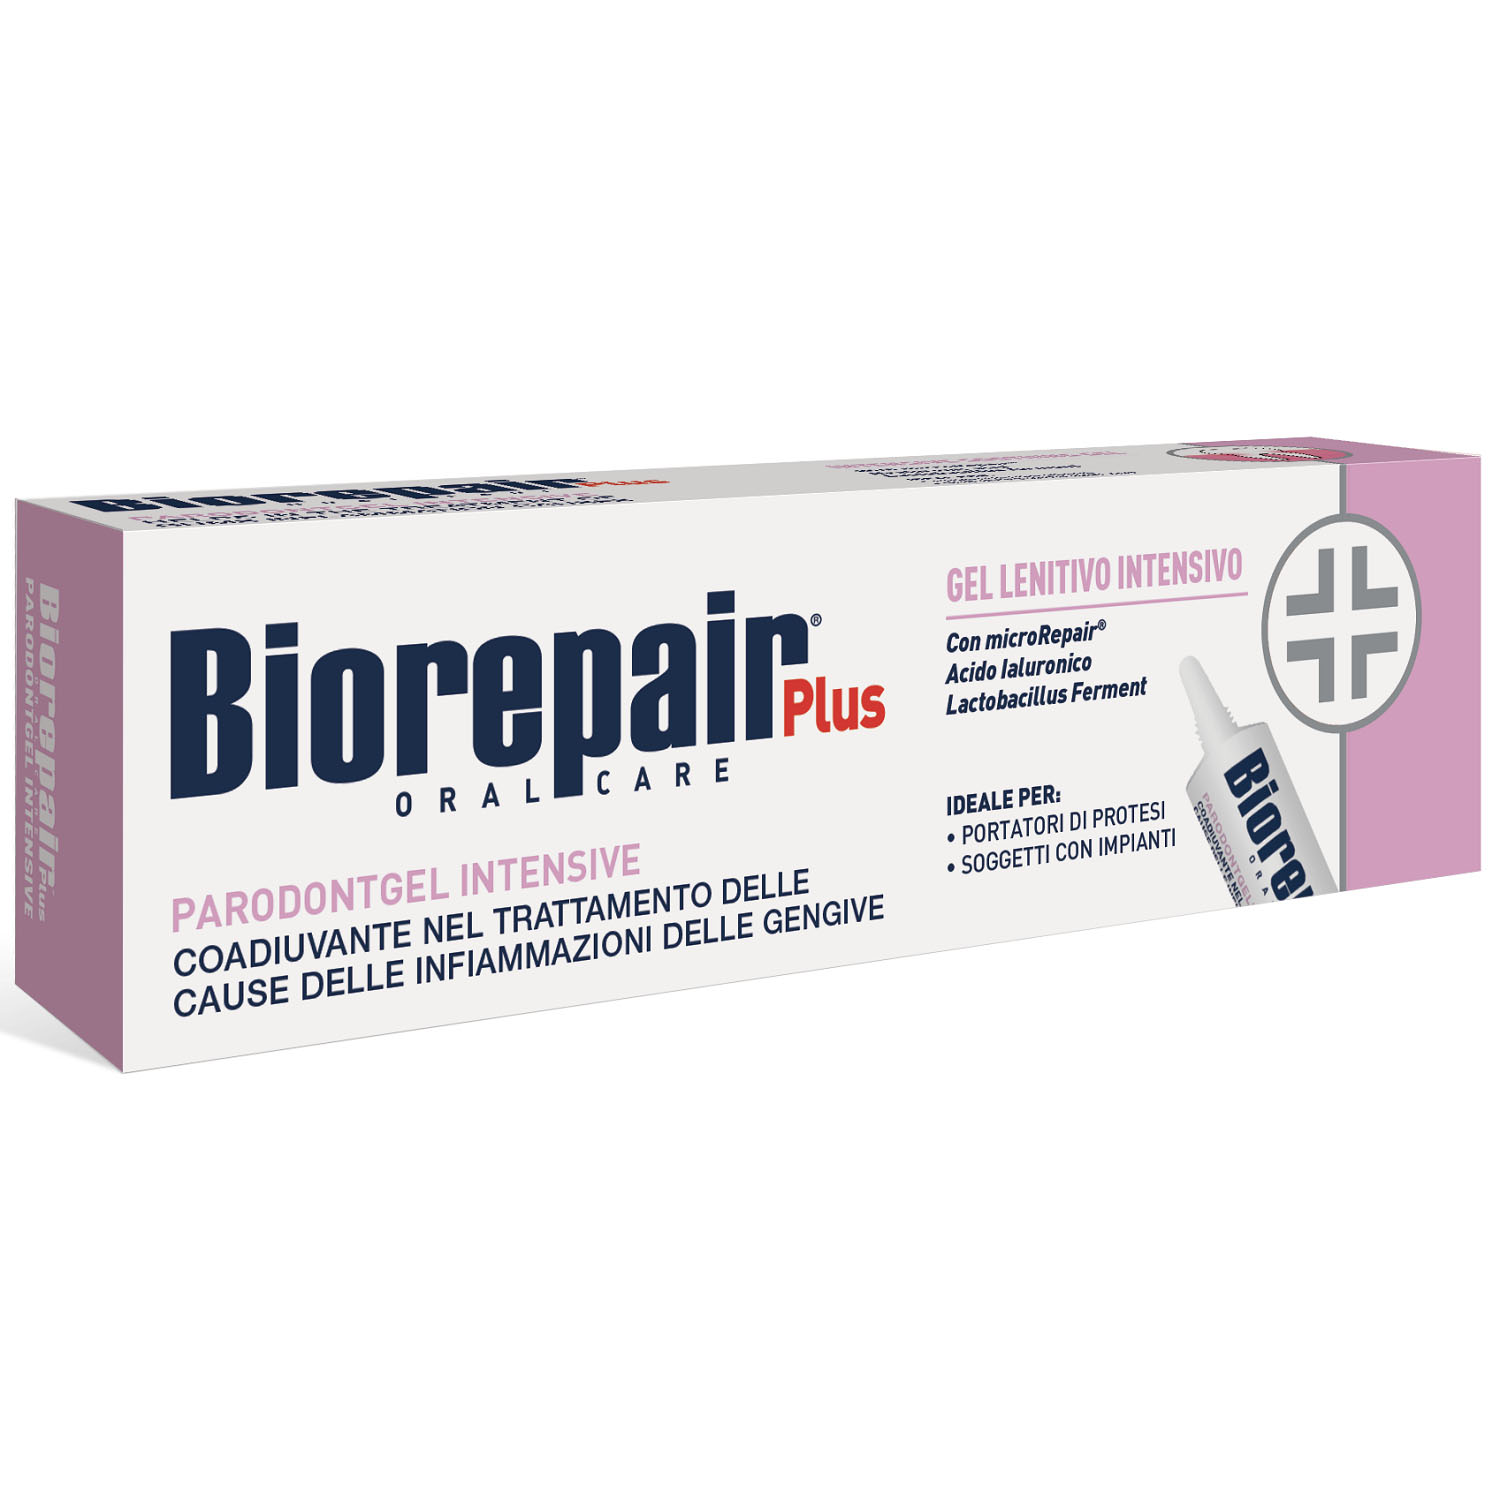 Biorepair Успокаивающий гель для десен Biorepair Plus Parodontgel Intensive 12+, 20 мл (Biorepair, Отбеливание и лечение)